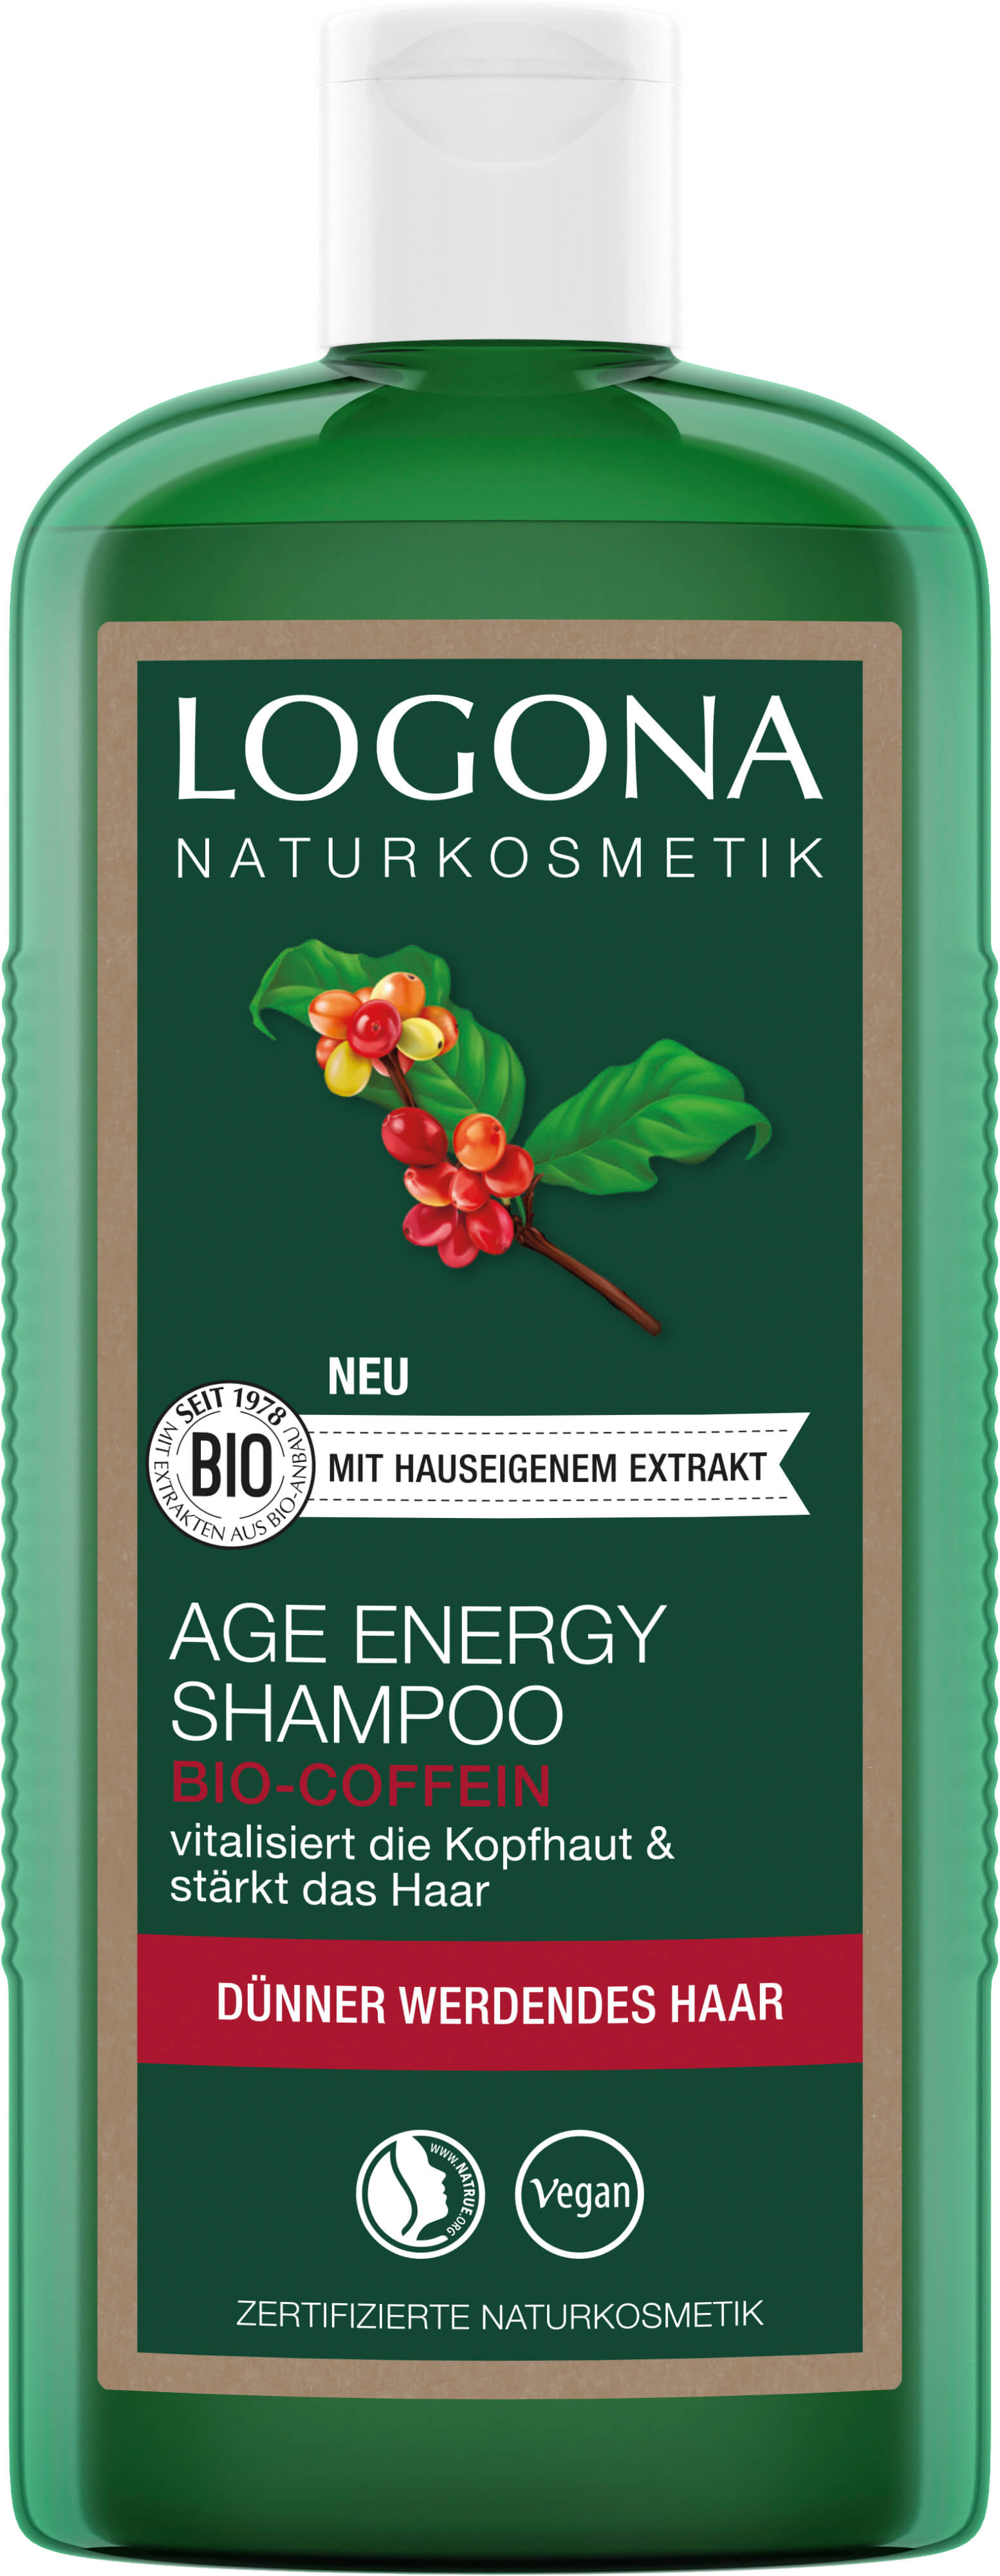 Age Energy LOGONA Naturkosmetik | Shampoo Bio-Coffein